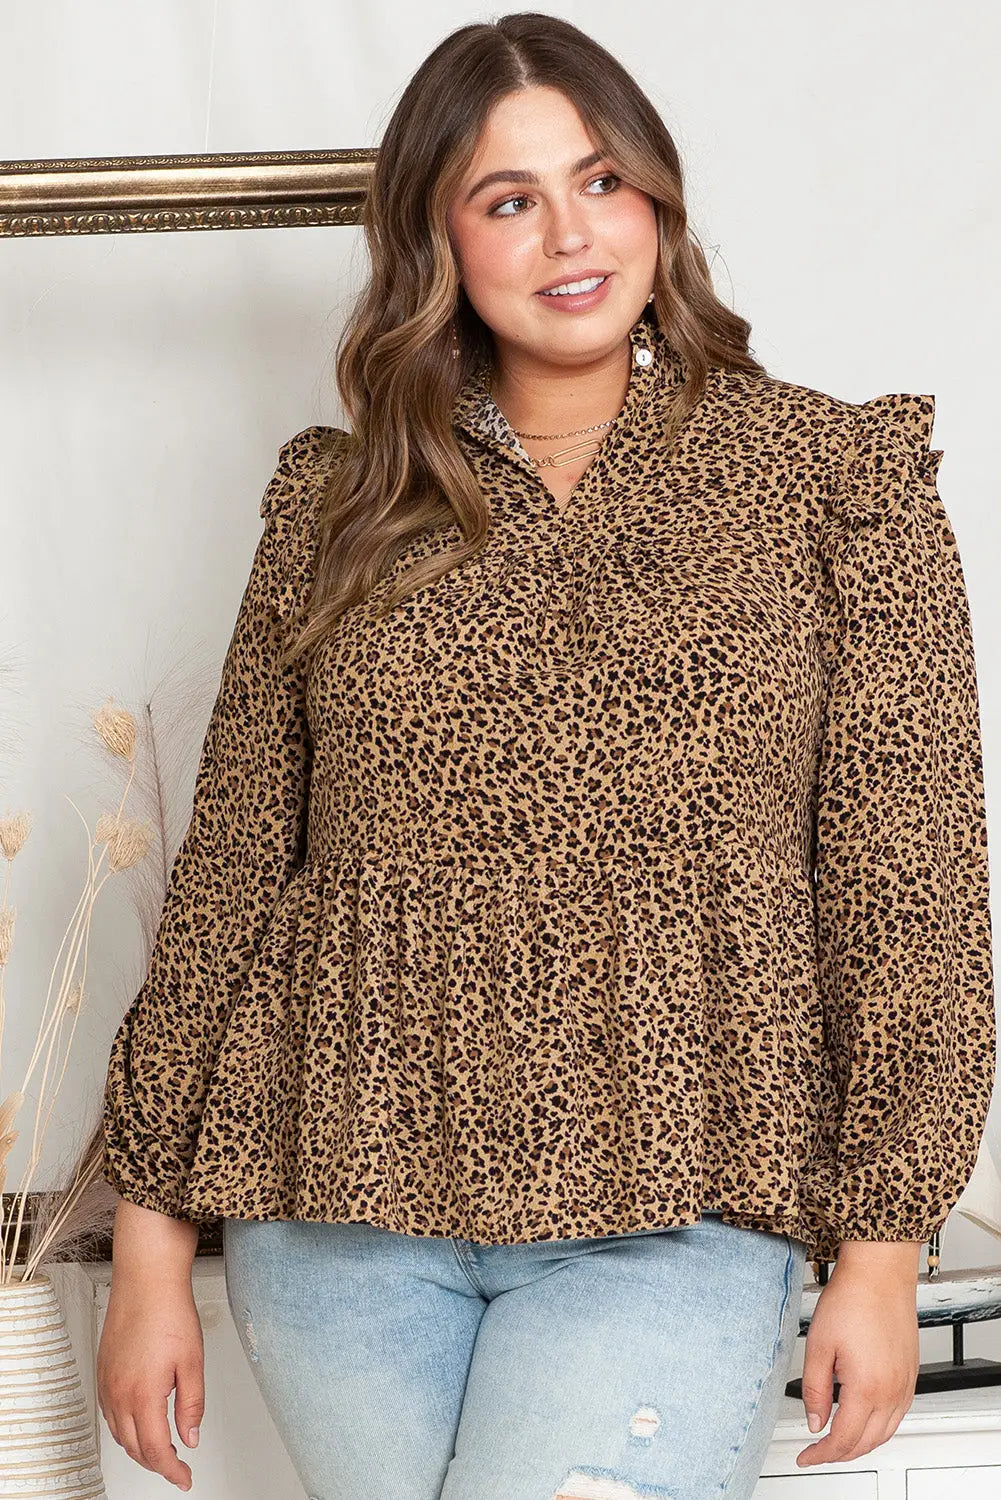 Leopard frilled shoulder decor plus size babydoll top - 1x / 100% polyester